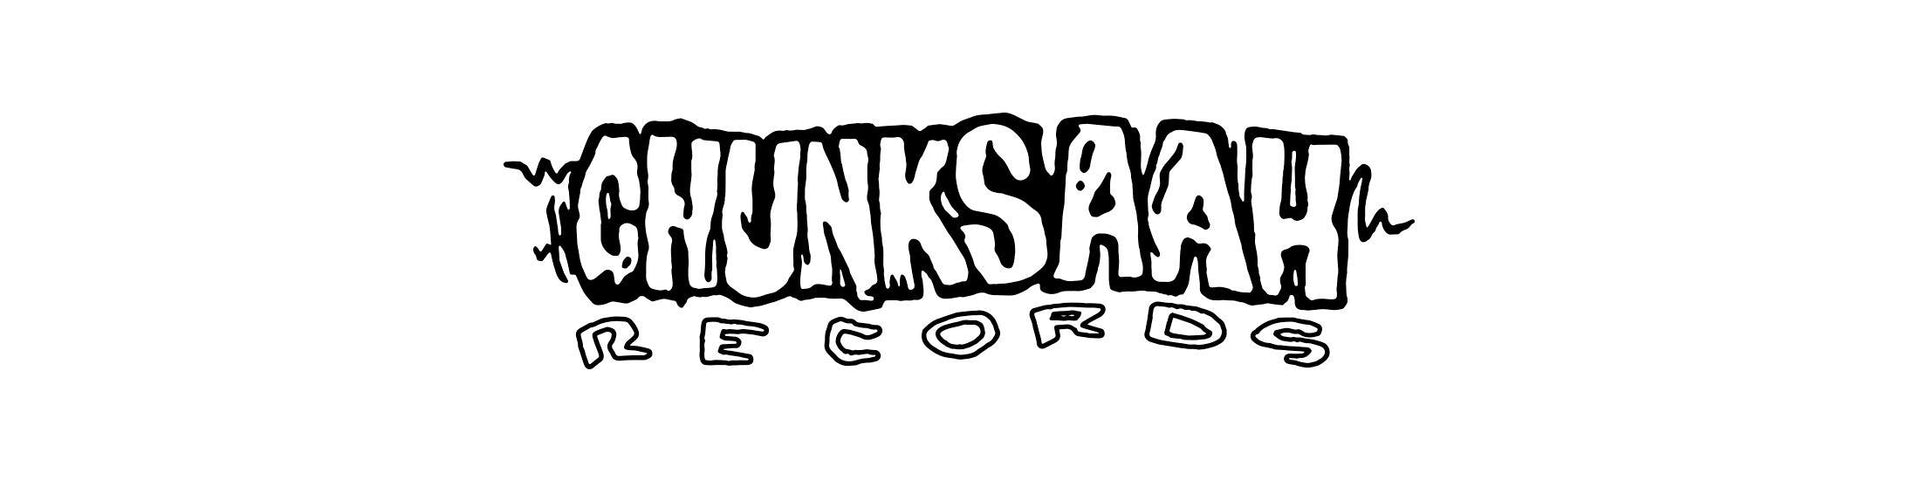 Shop – Chunksaah Records full – Band & Music Merch – Cold Cuts Merch